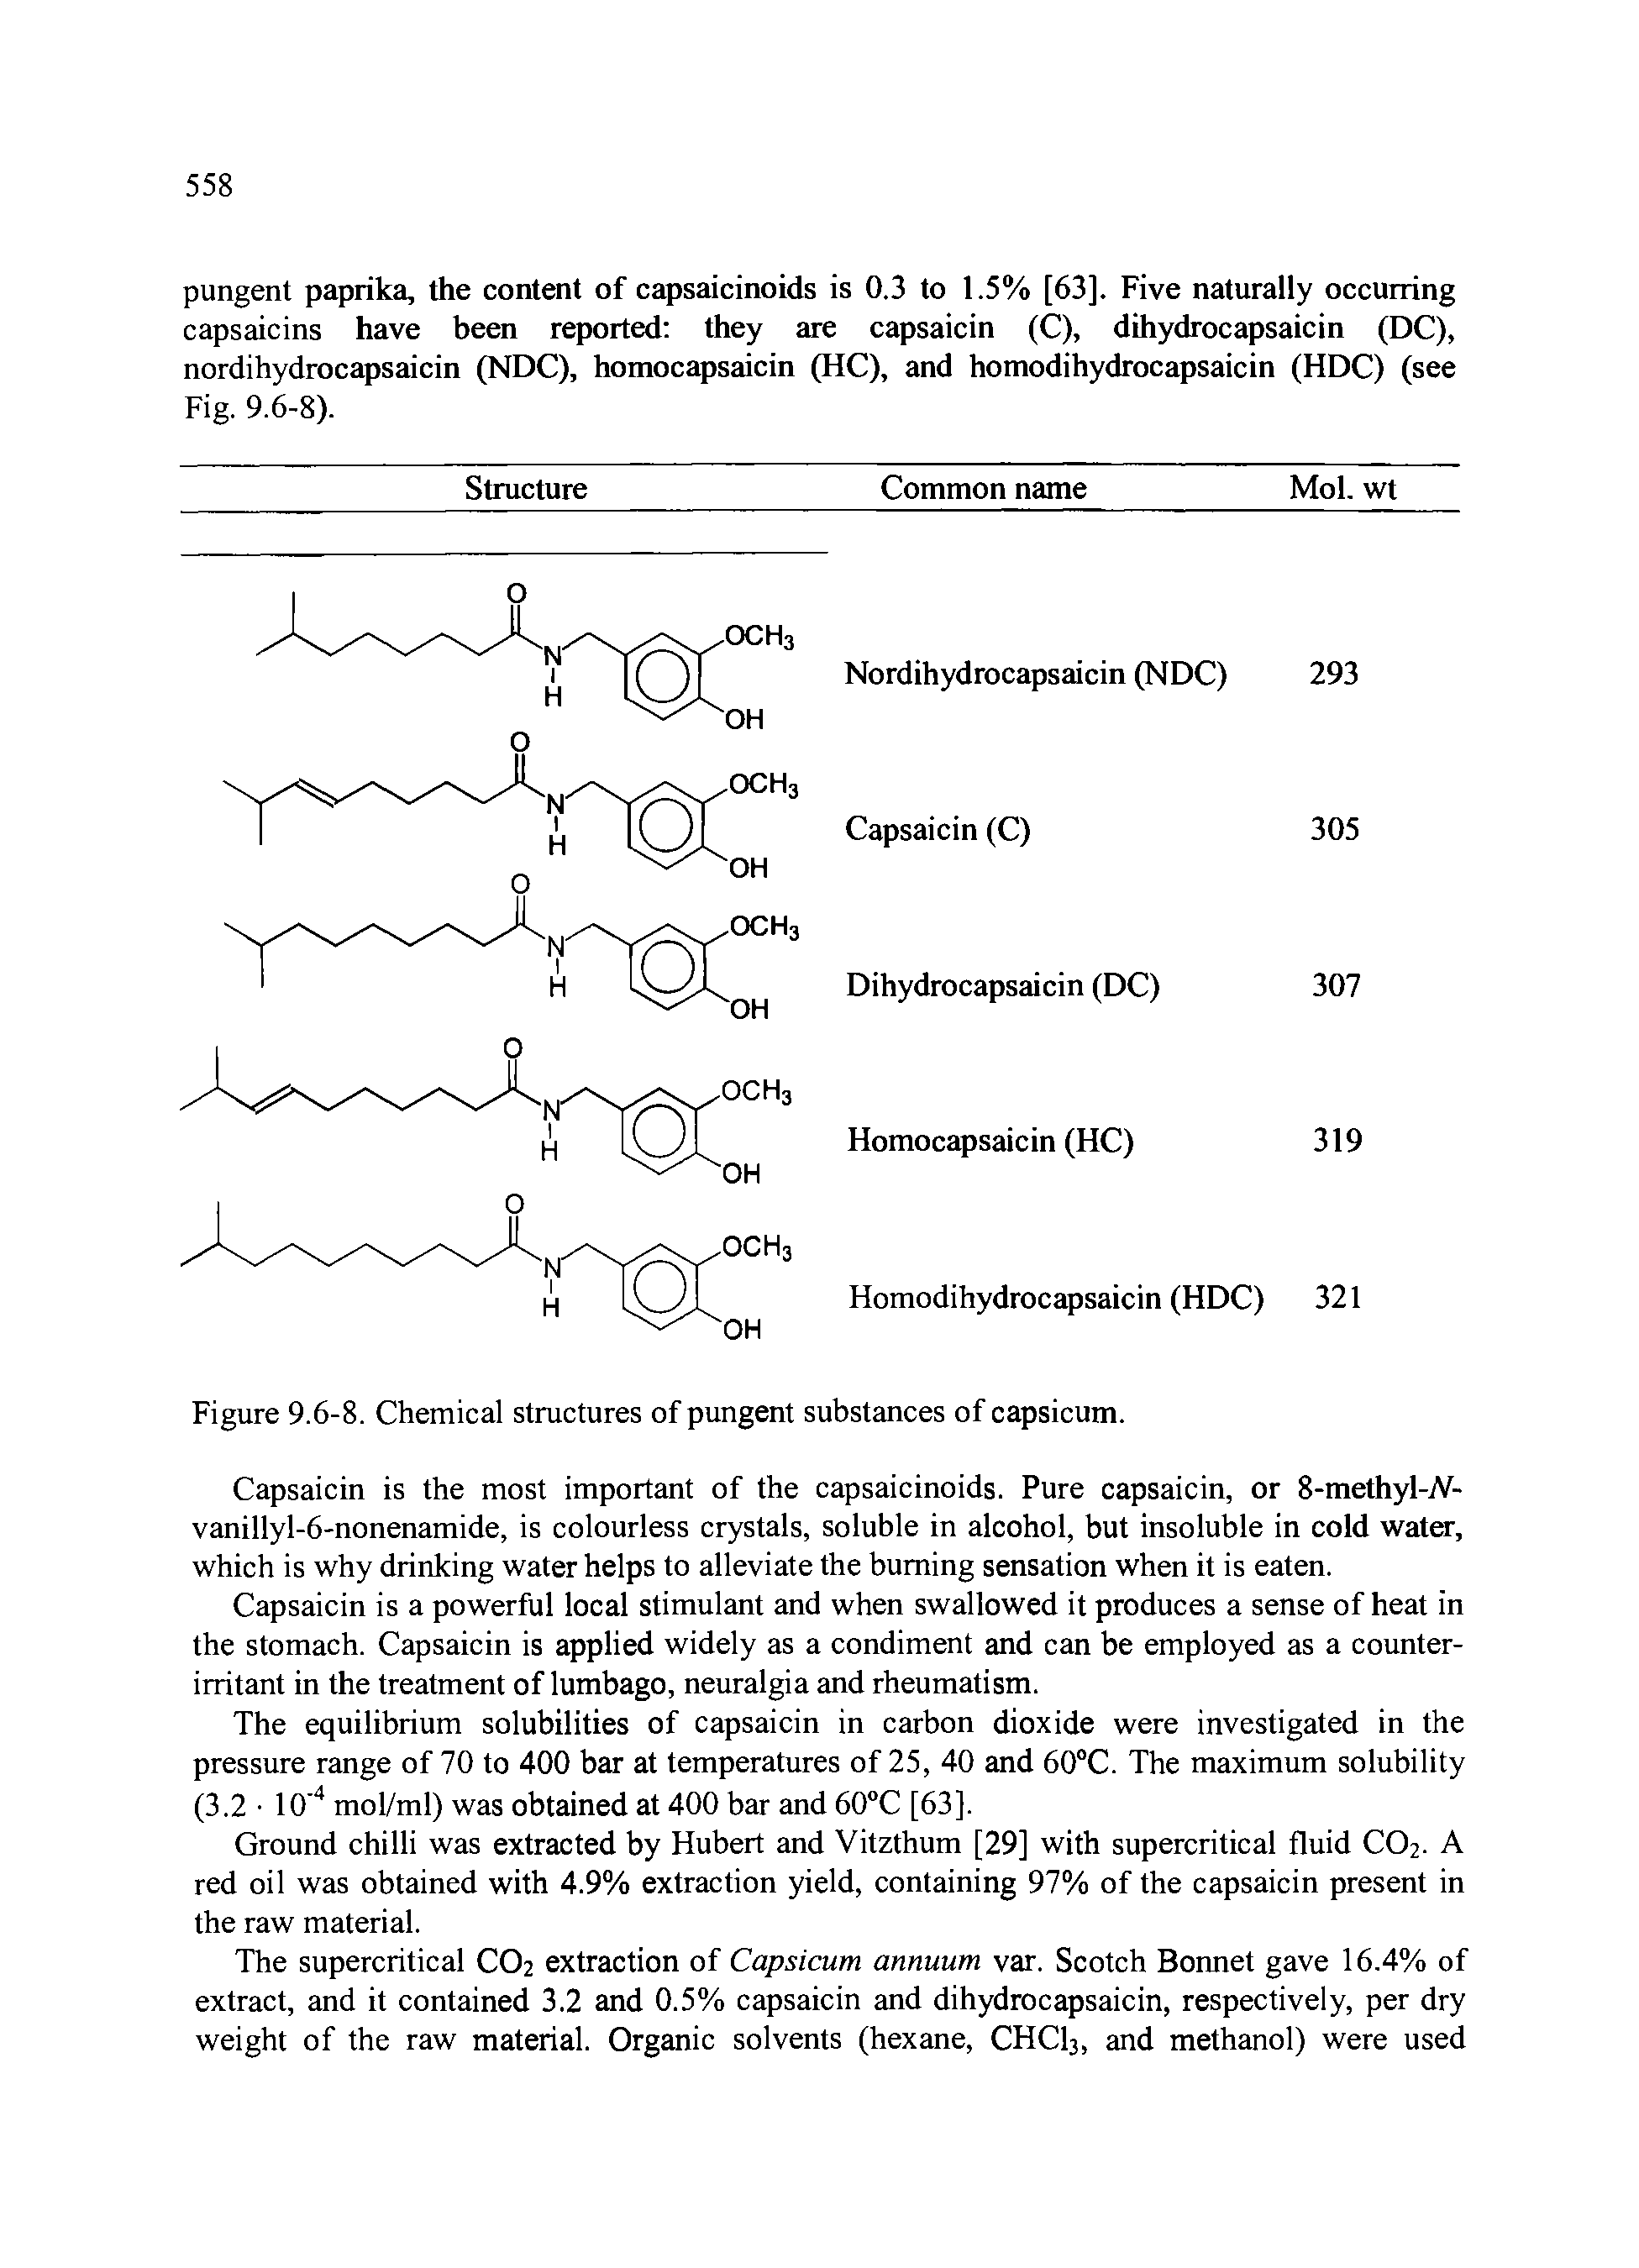 Figure 9.6-8. Chemical structures of pungent substances of capsicum.